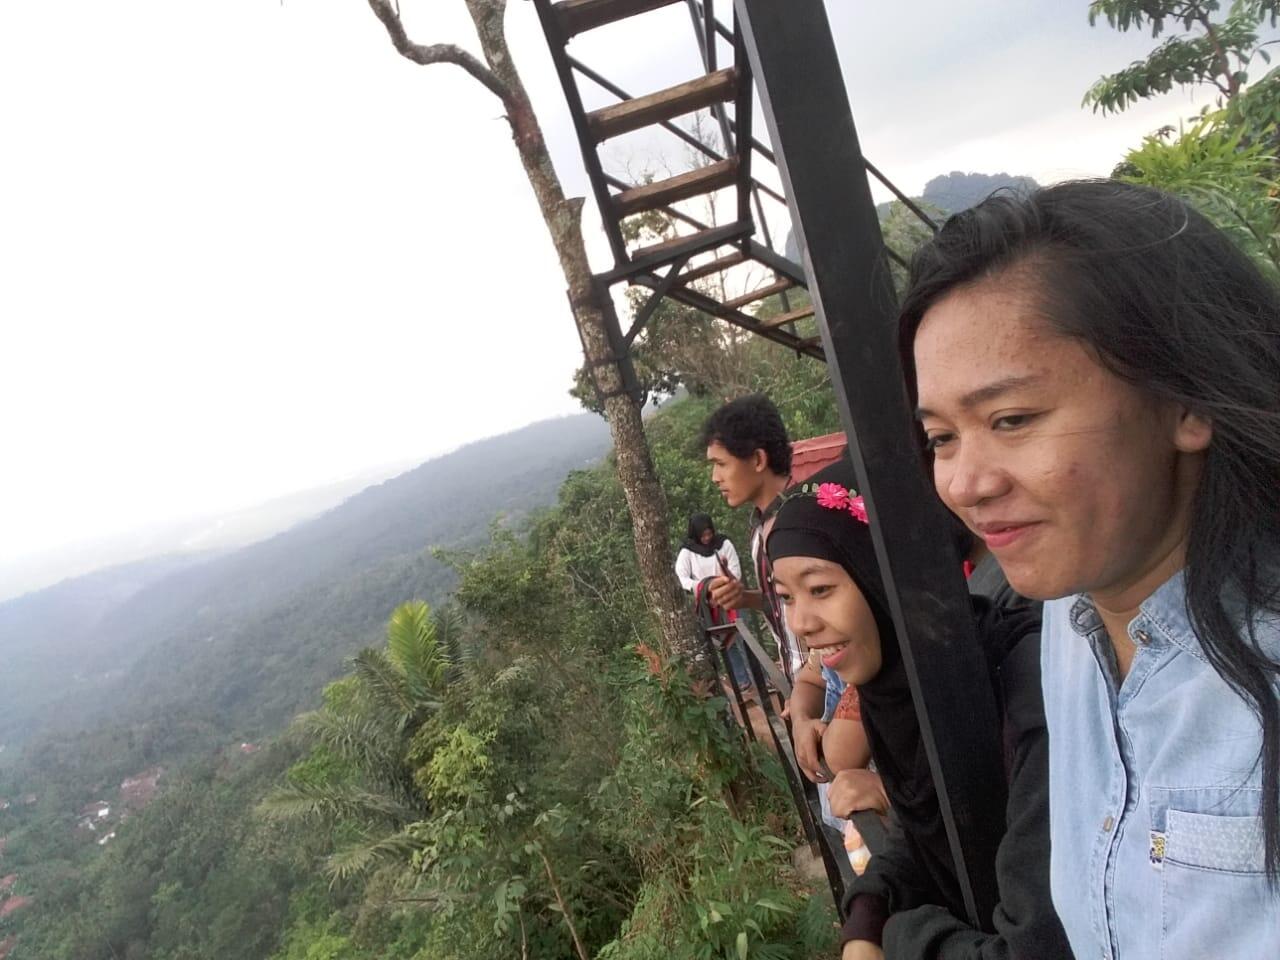 Mari Berkunjung ke Bukit Asmara Situk (BAS) Banjarnegara, Indahnya Gak Ketolong !